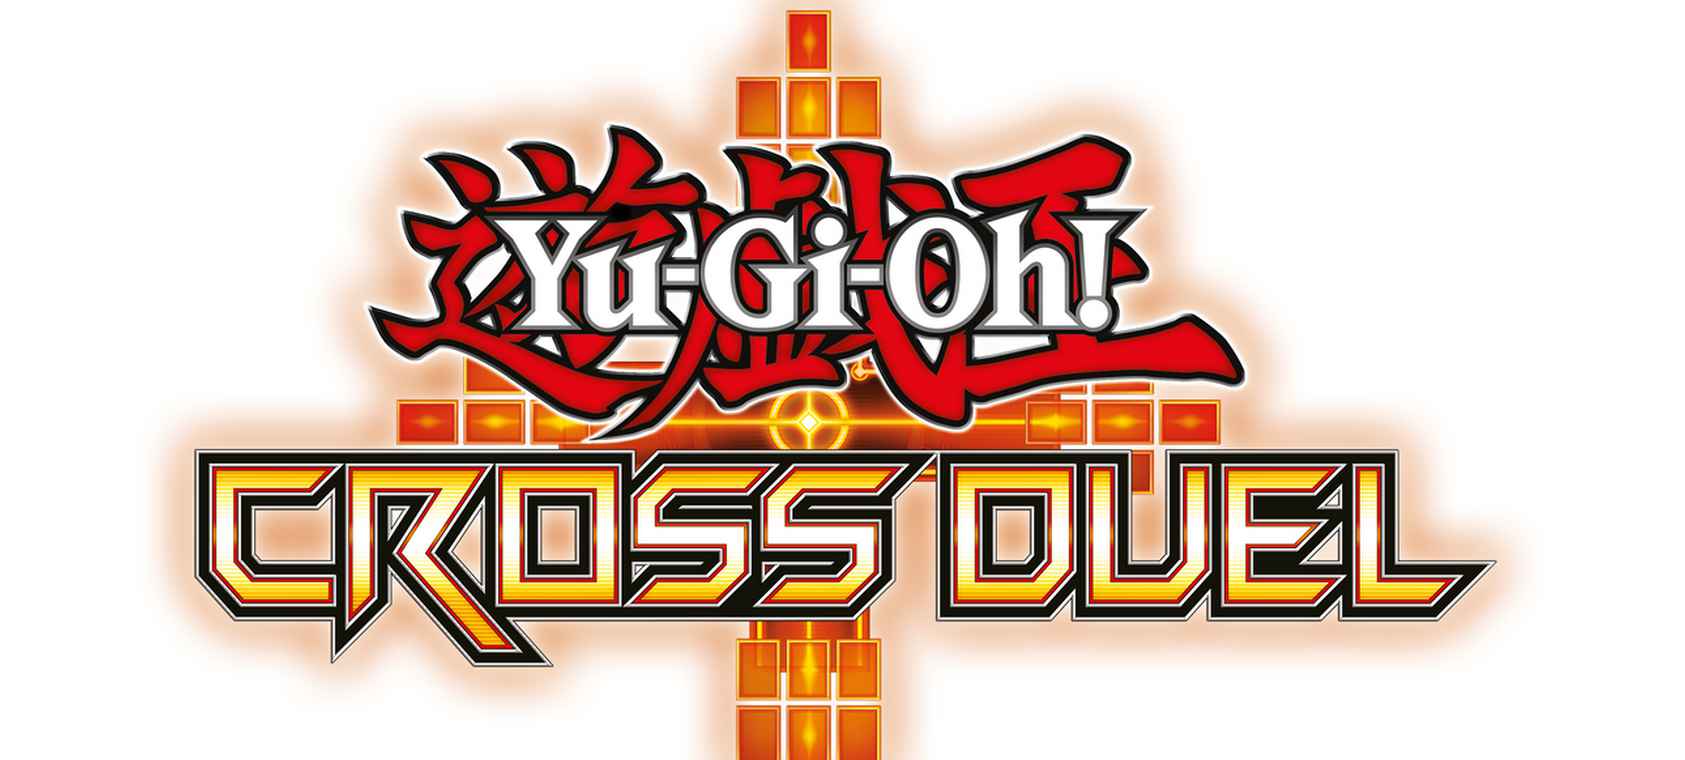 Yu-Gi-Oh! Cross Duel, aperte le registrazioni